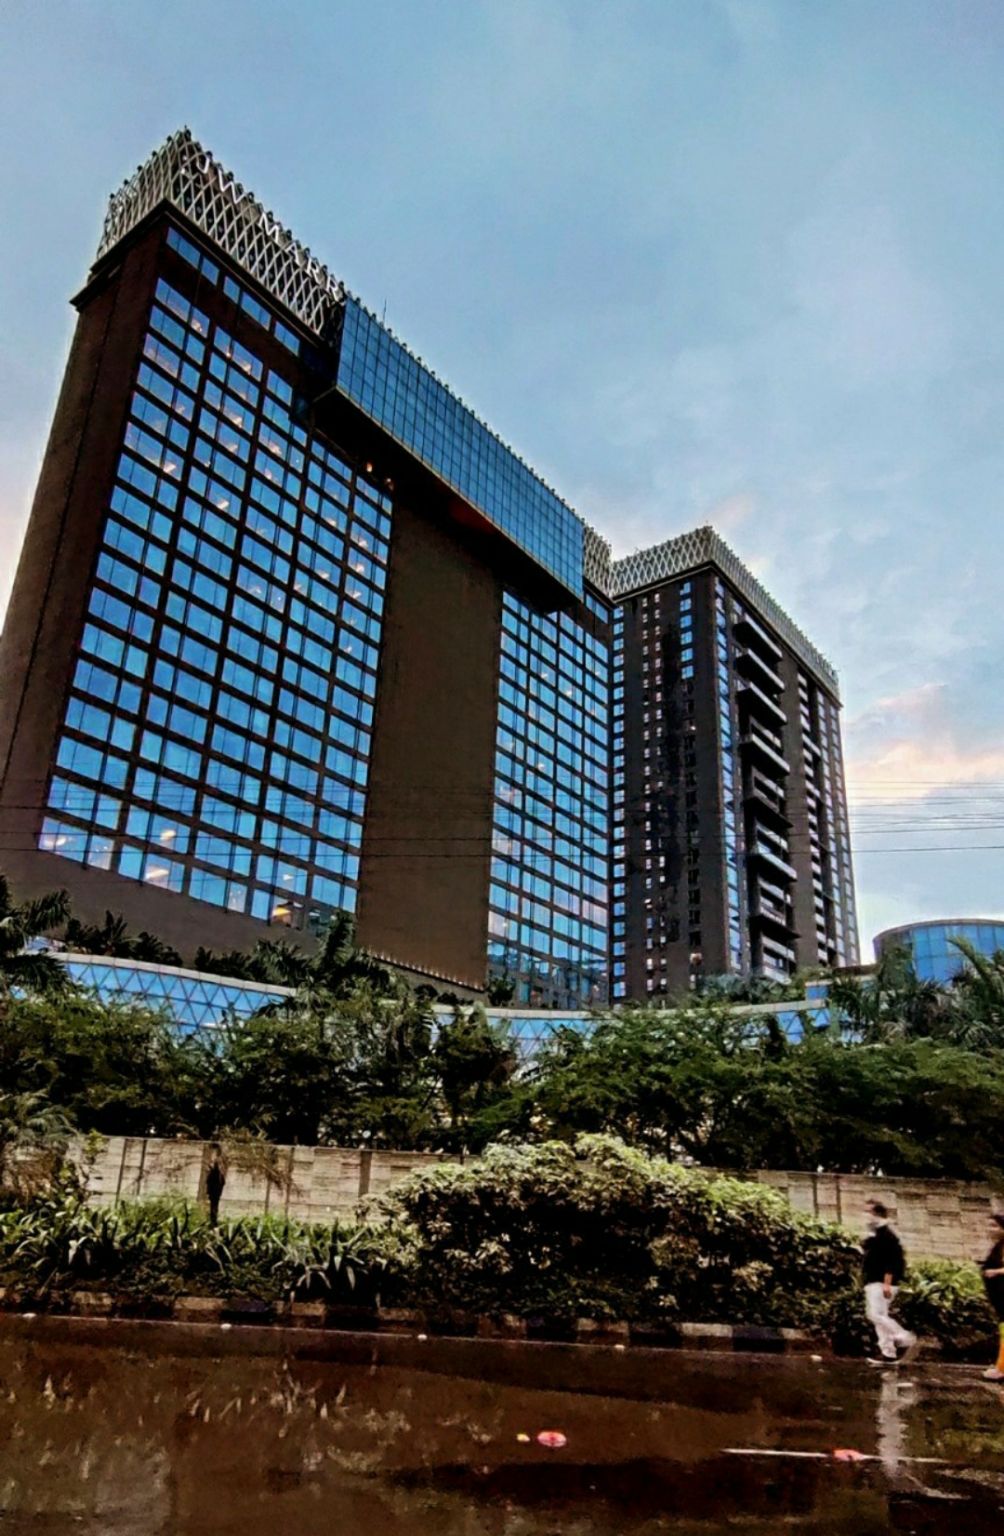 Photo of JW Marriott Hotel Kolkata By Abhinav Anand